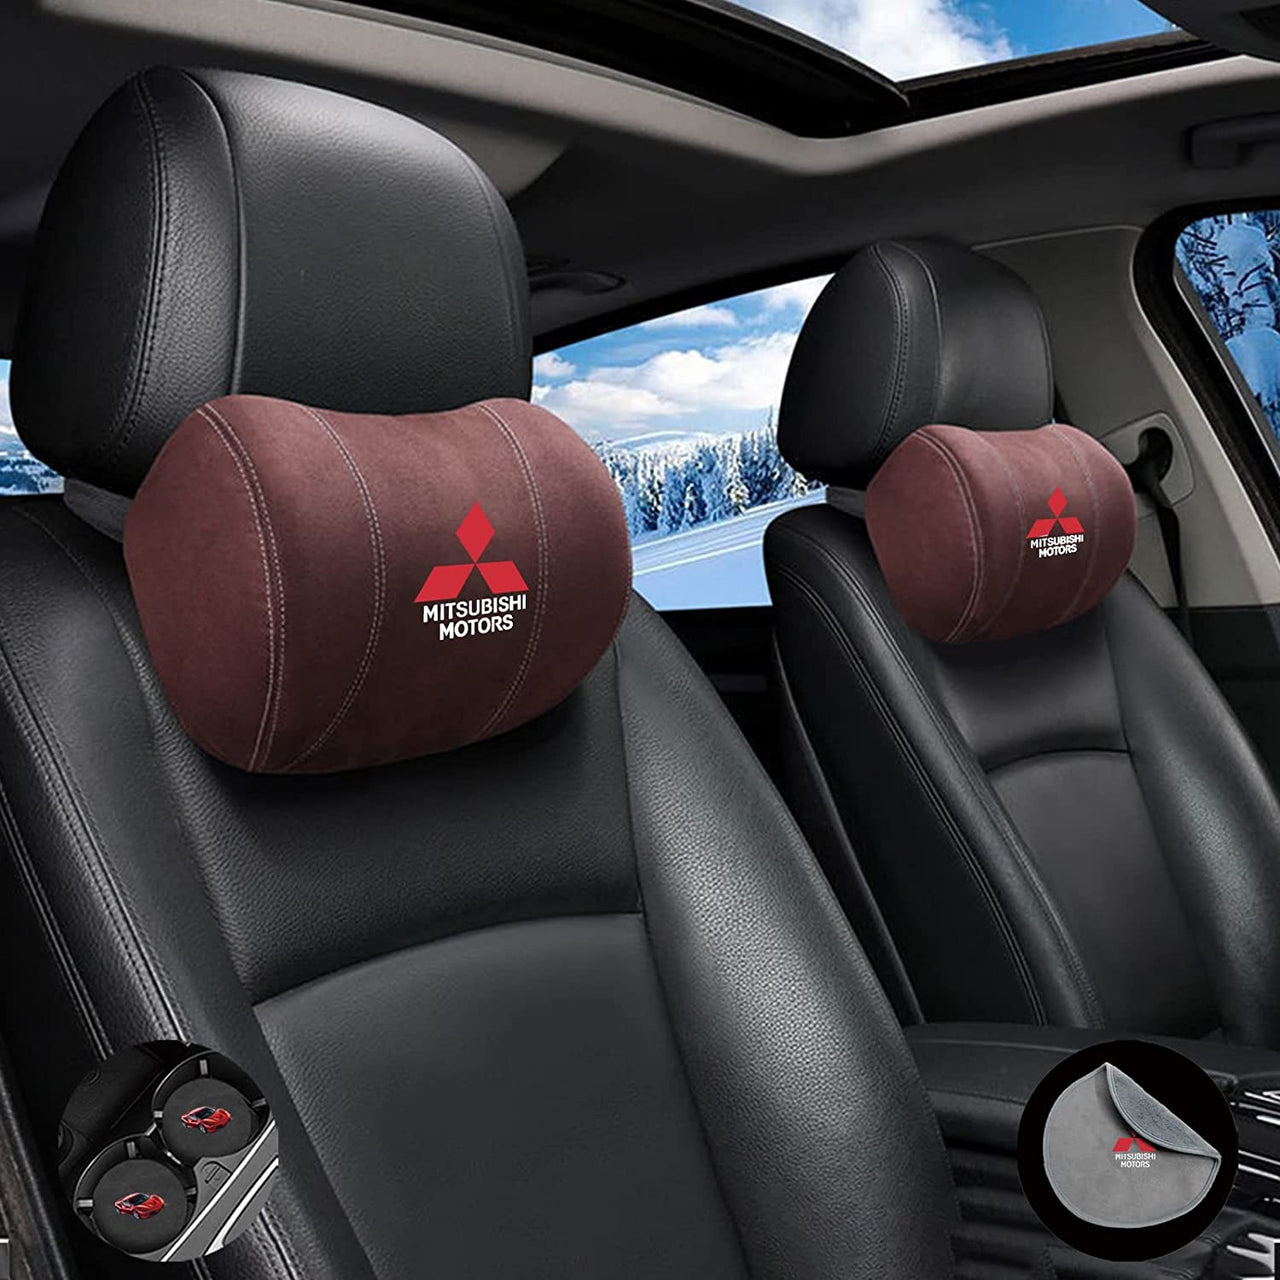 Custom-Fit for Cars, Car Headrest (2 Piece) Premium Memory Foam Car Neck Pillow with Logo